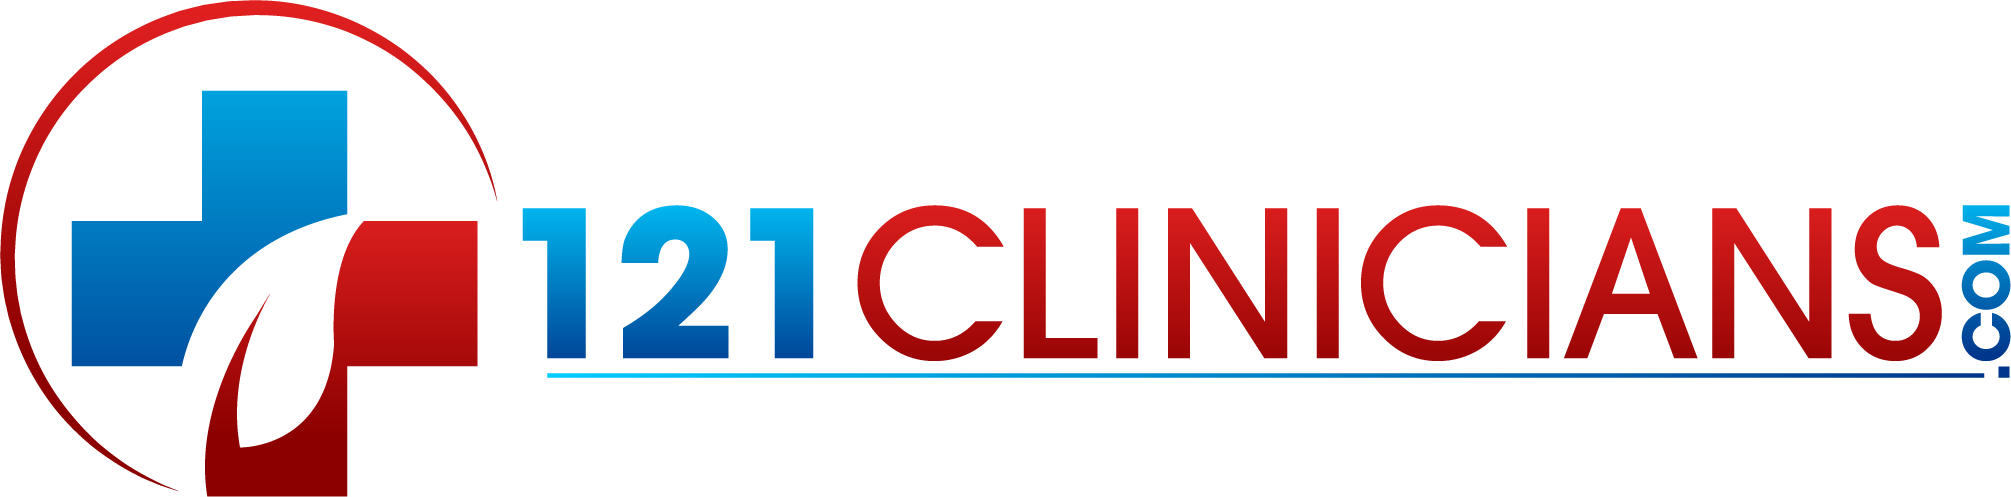 121clinicians Telehealth Clinic